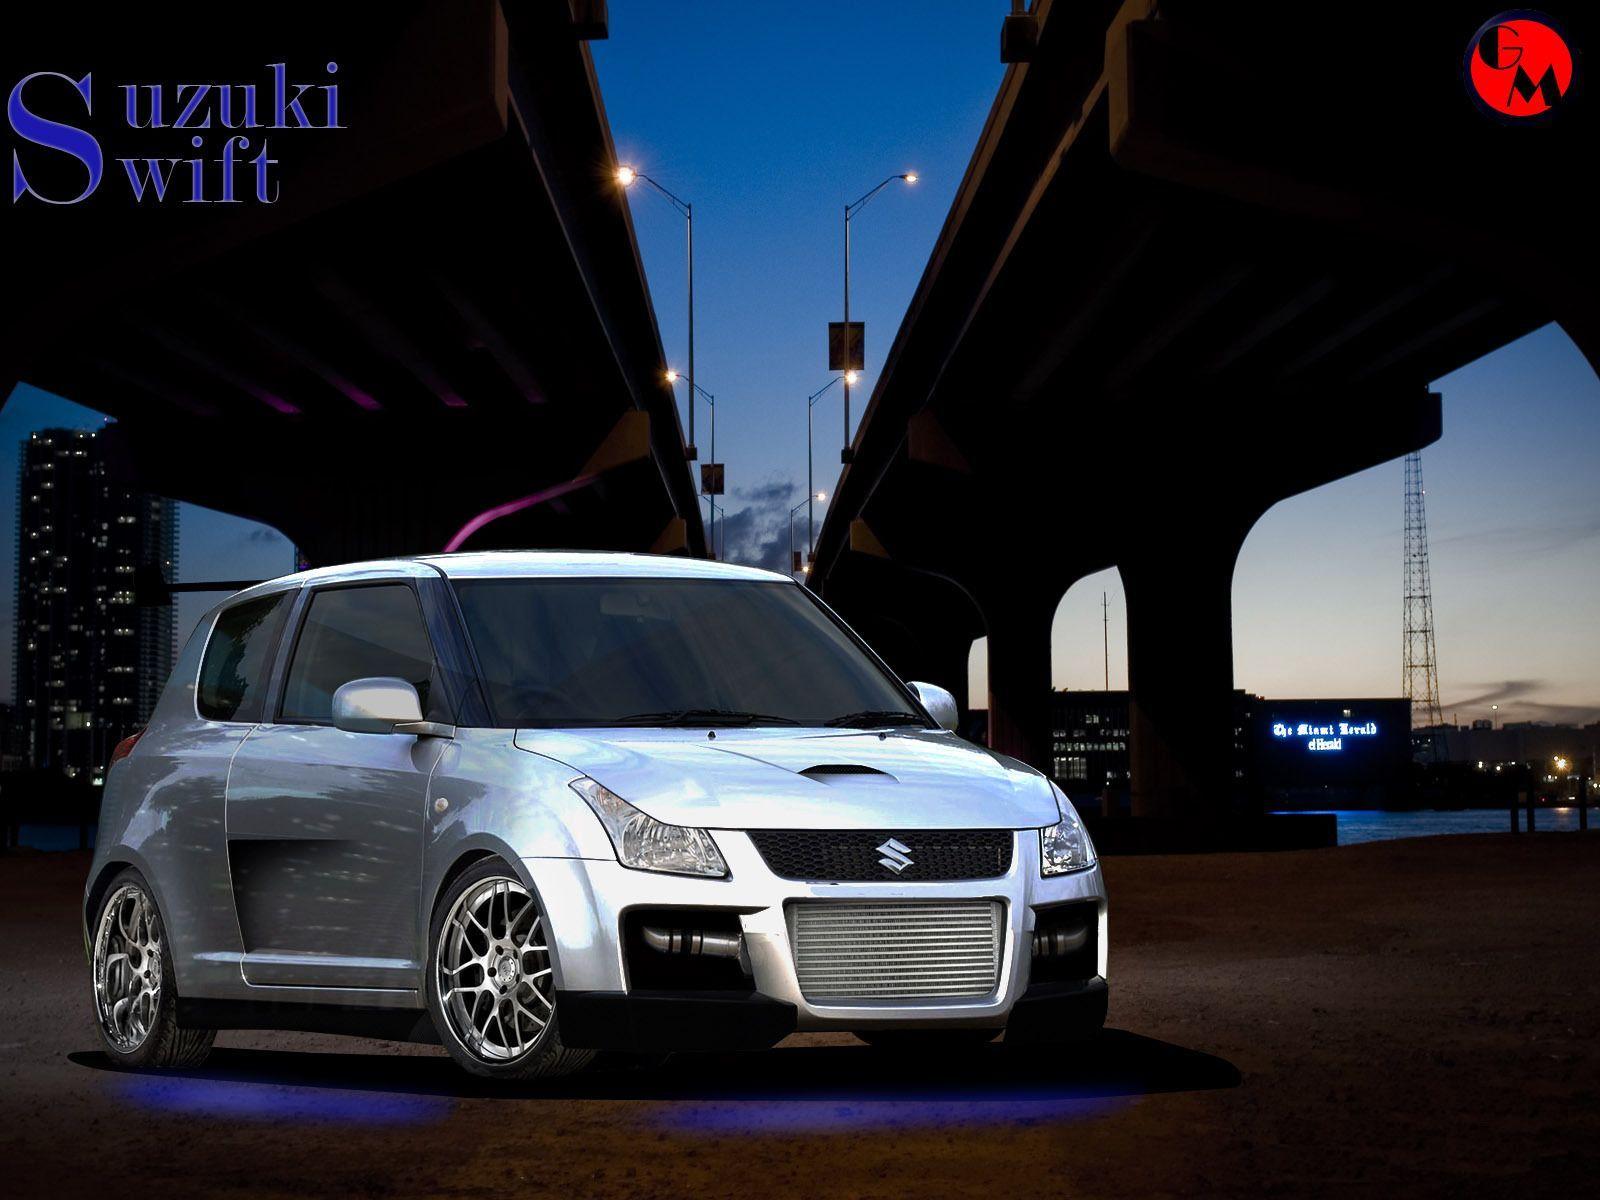 Suzuki_Reliable_car_Suzuki_Swift. SUZUKI SWIFT. Cars